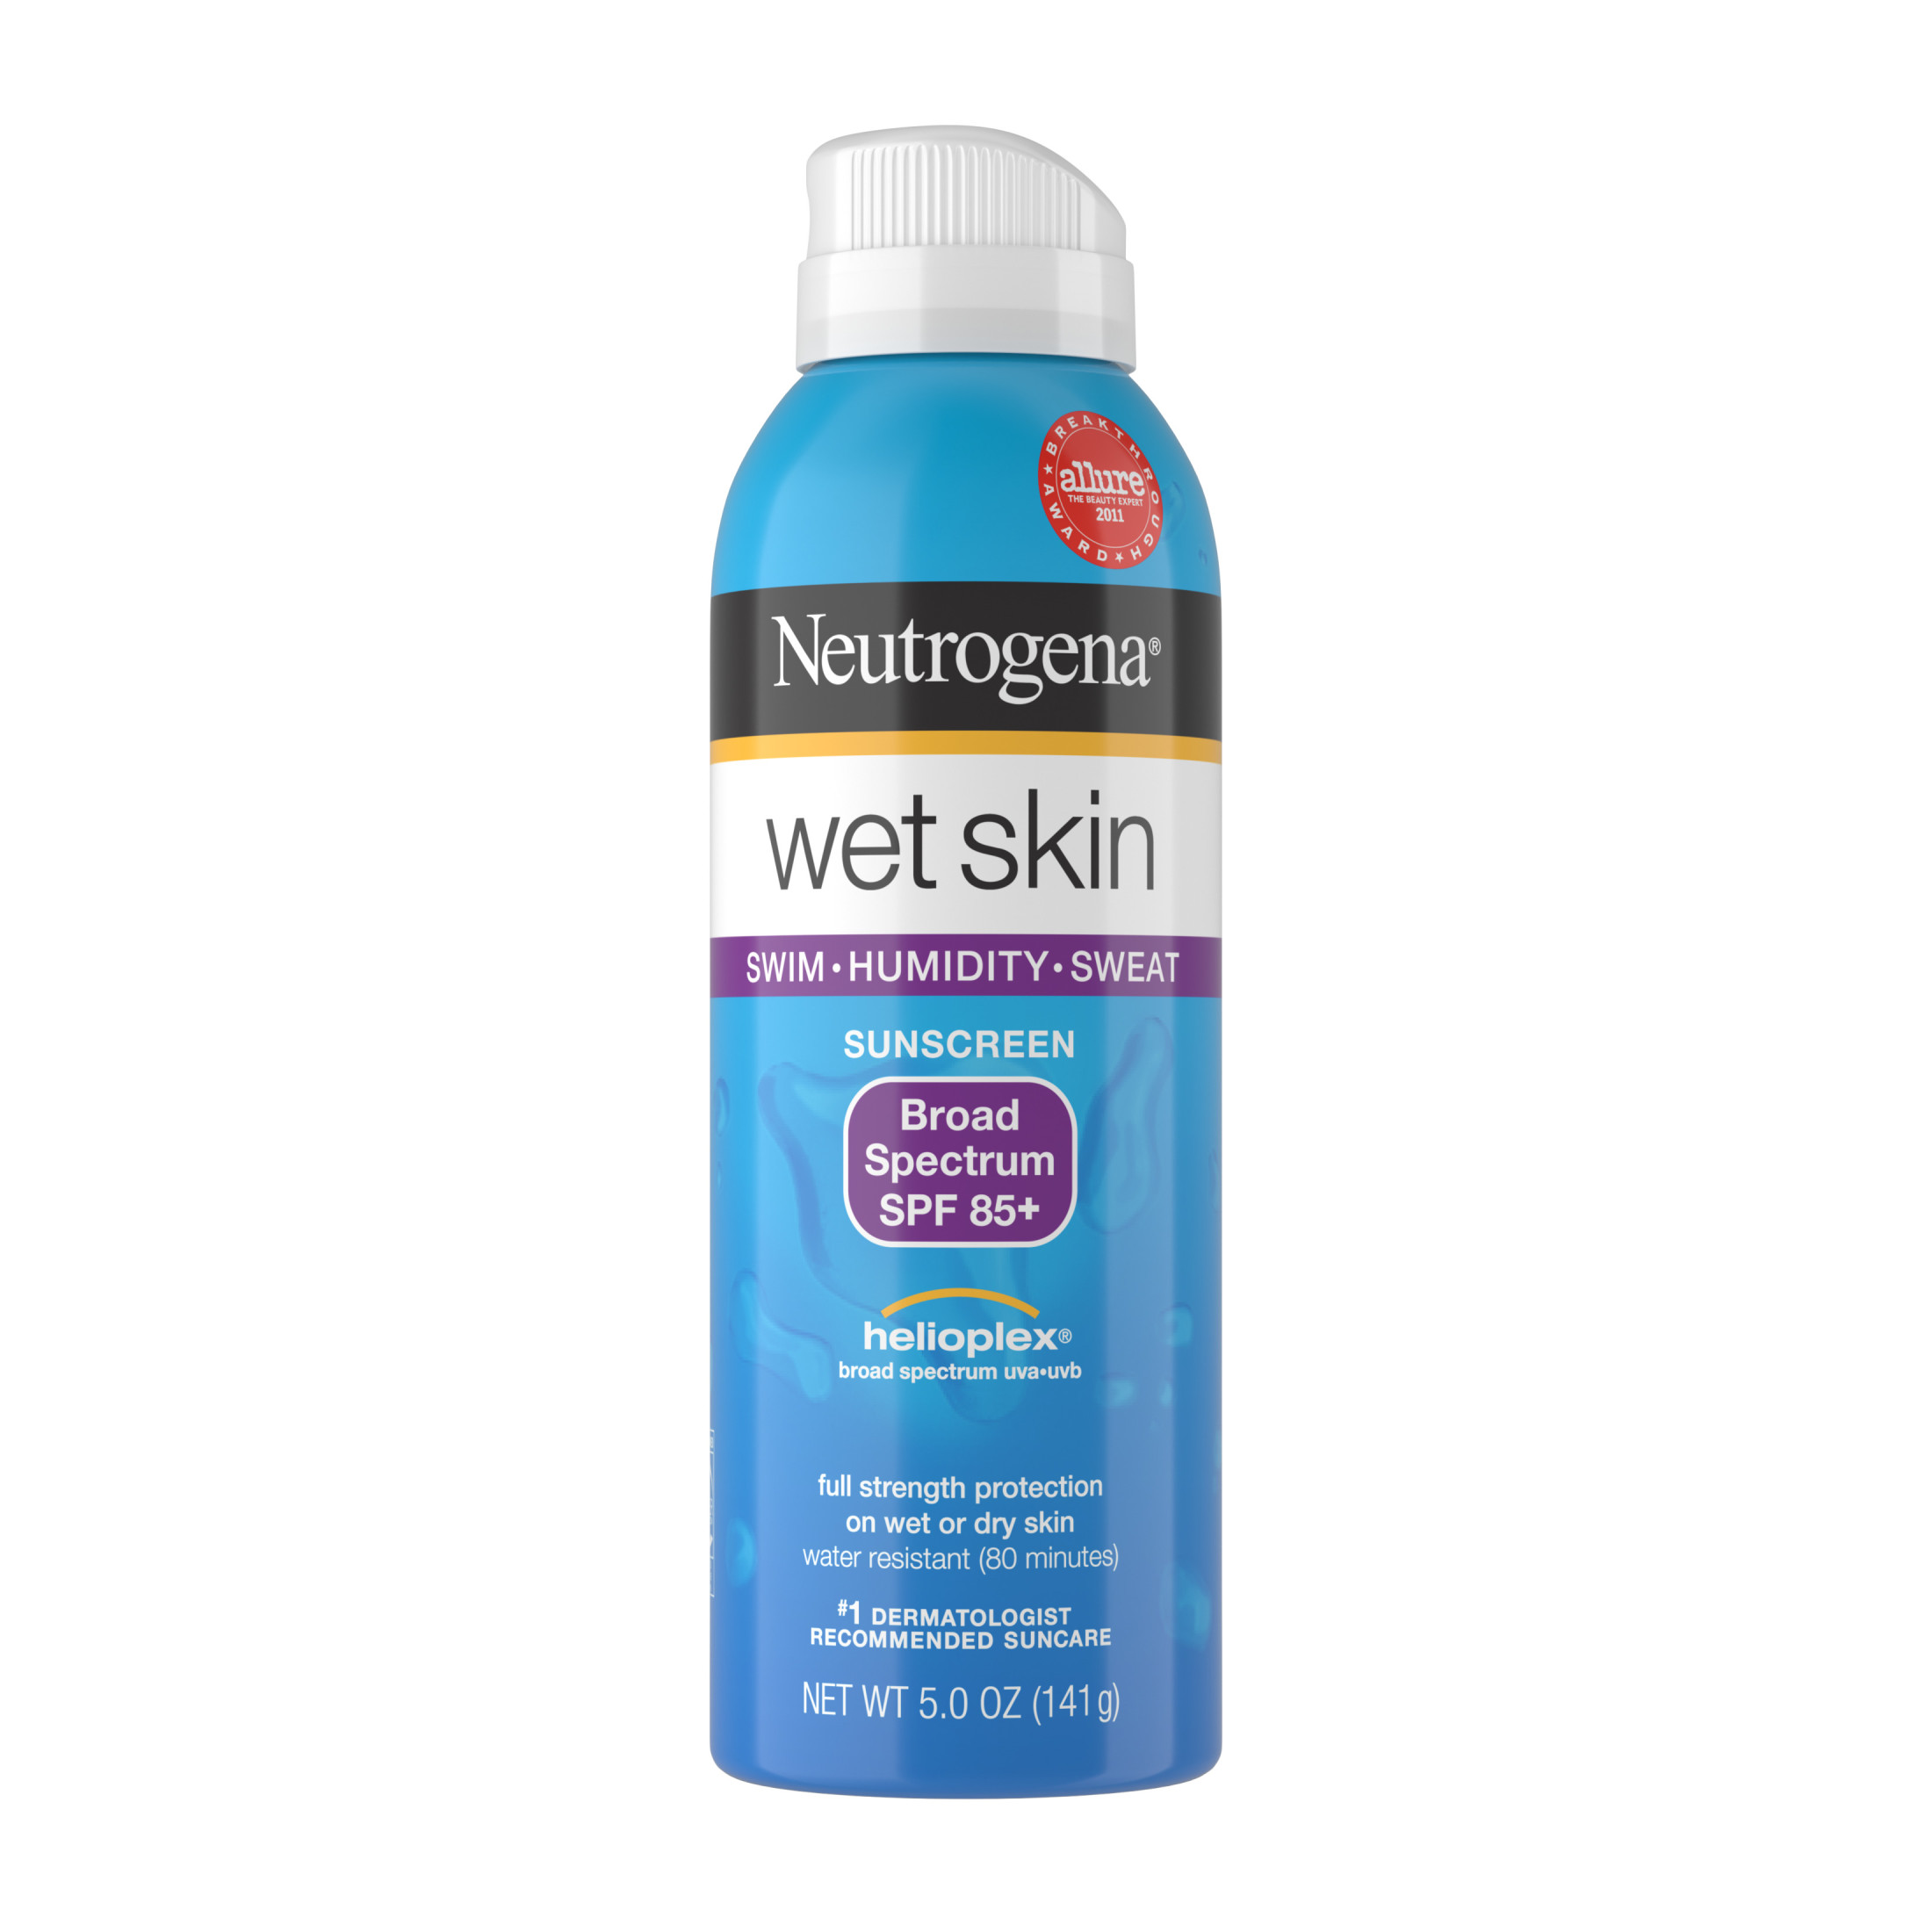 Neutrogena Wet Skin Sunscreen Spray Broad Spectrum SPF 85+, 5 oz - image 1 of 6